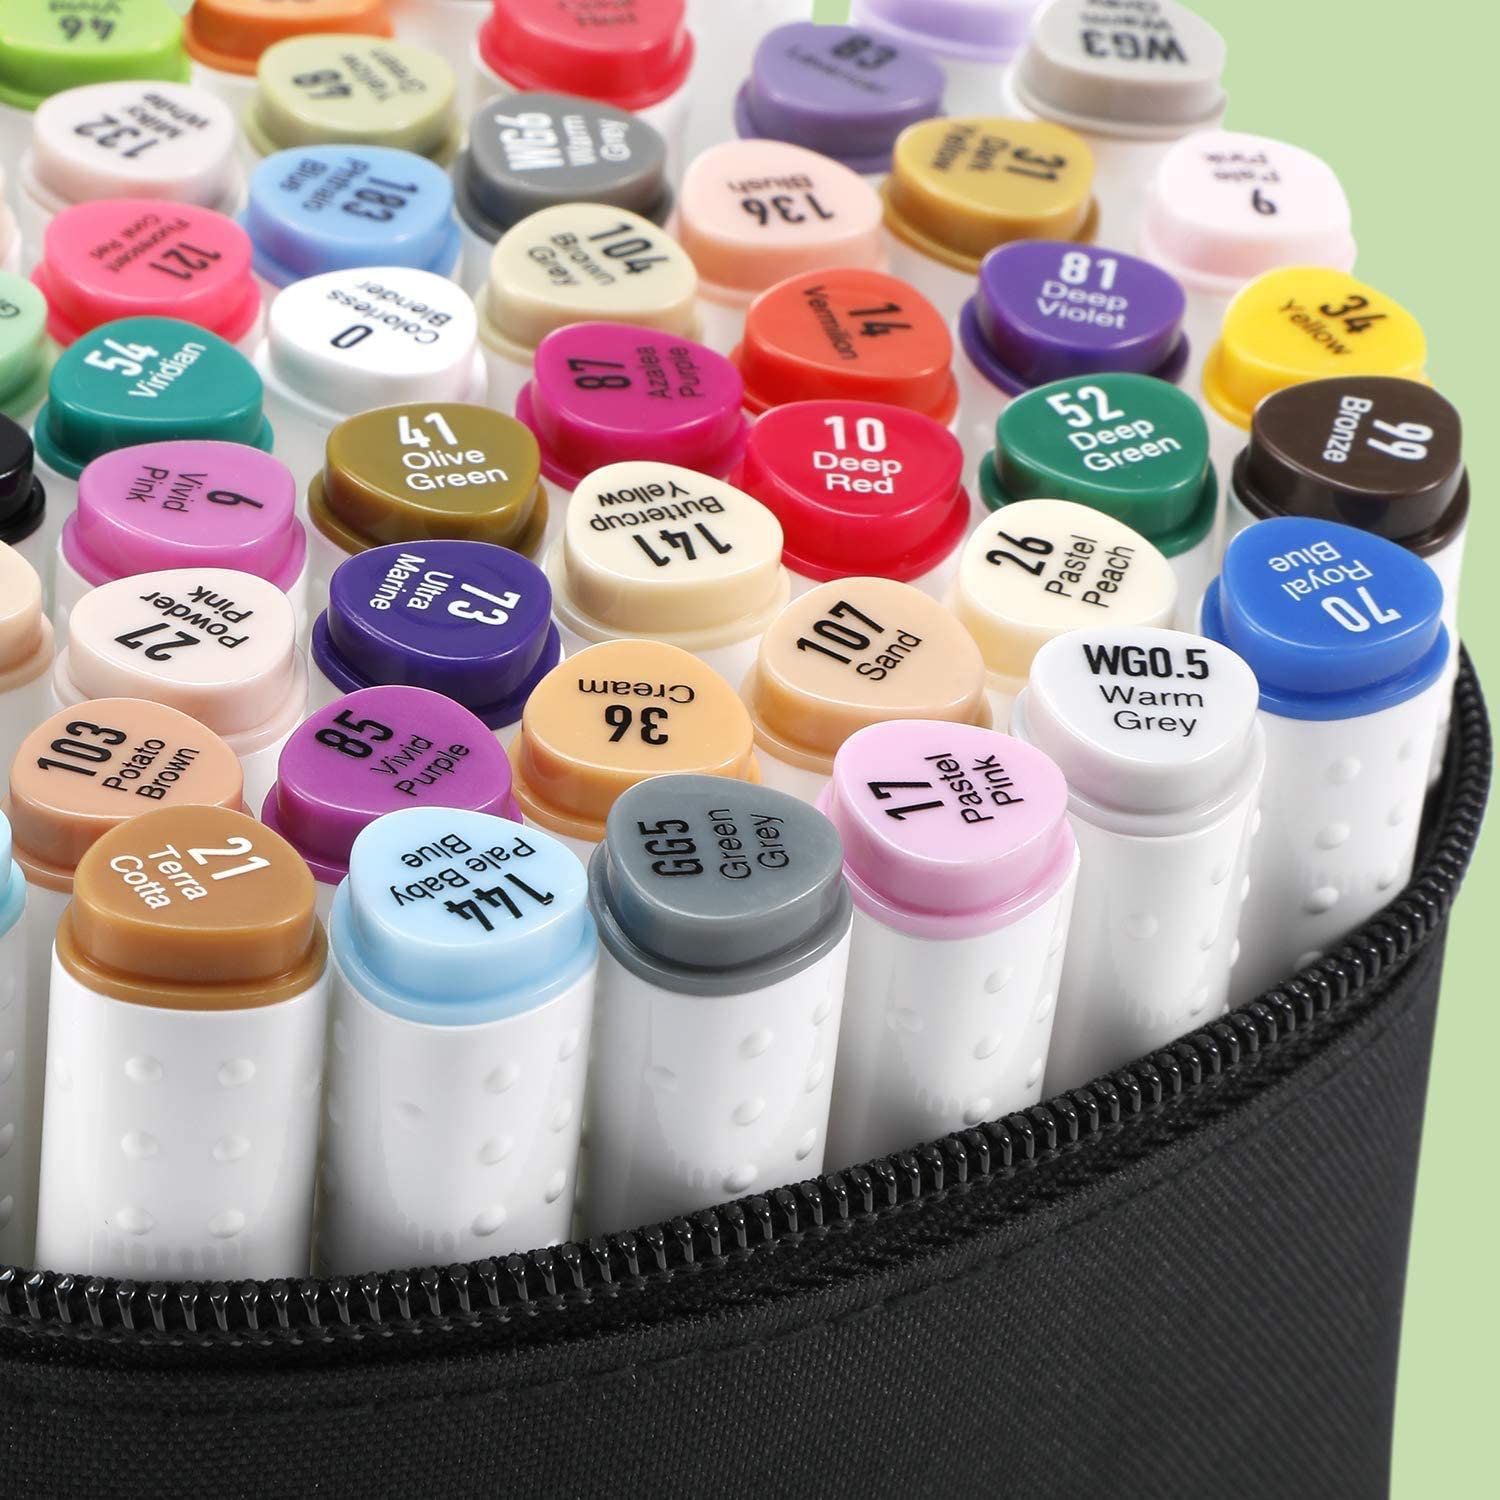 Ohuhu Alcohol Markers Brush Tip - 104-color Art Marker Set for